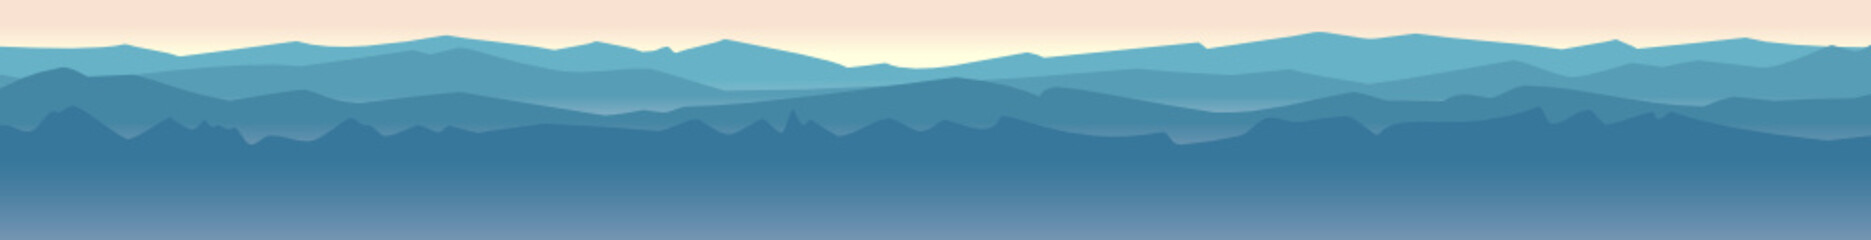 Mountain landscape horizontal